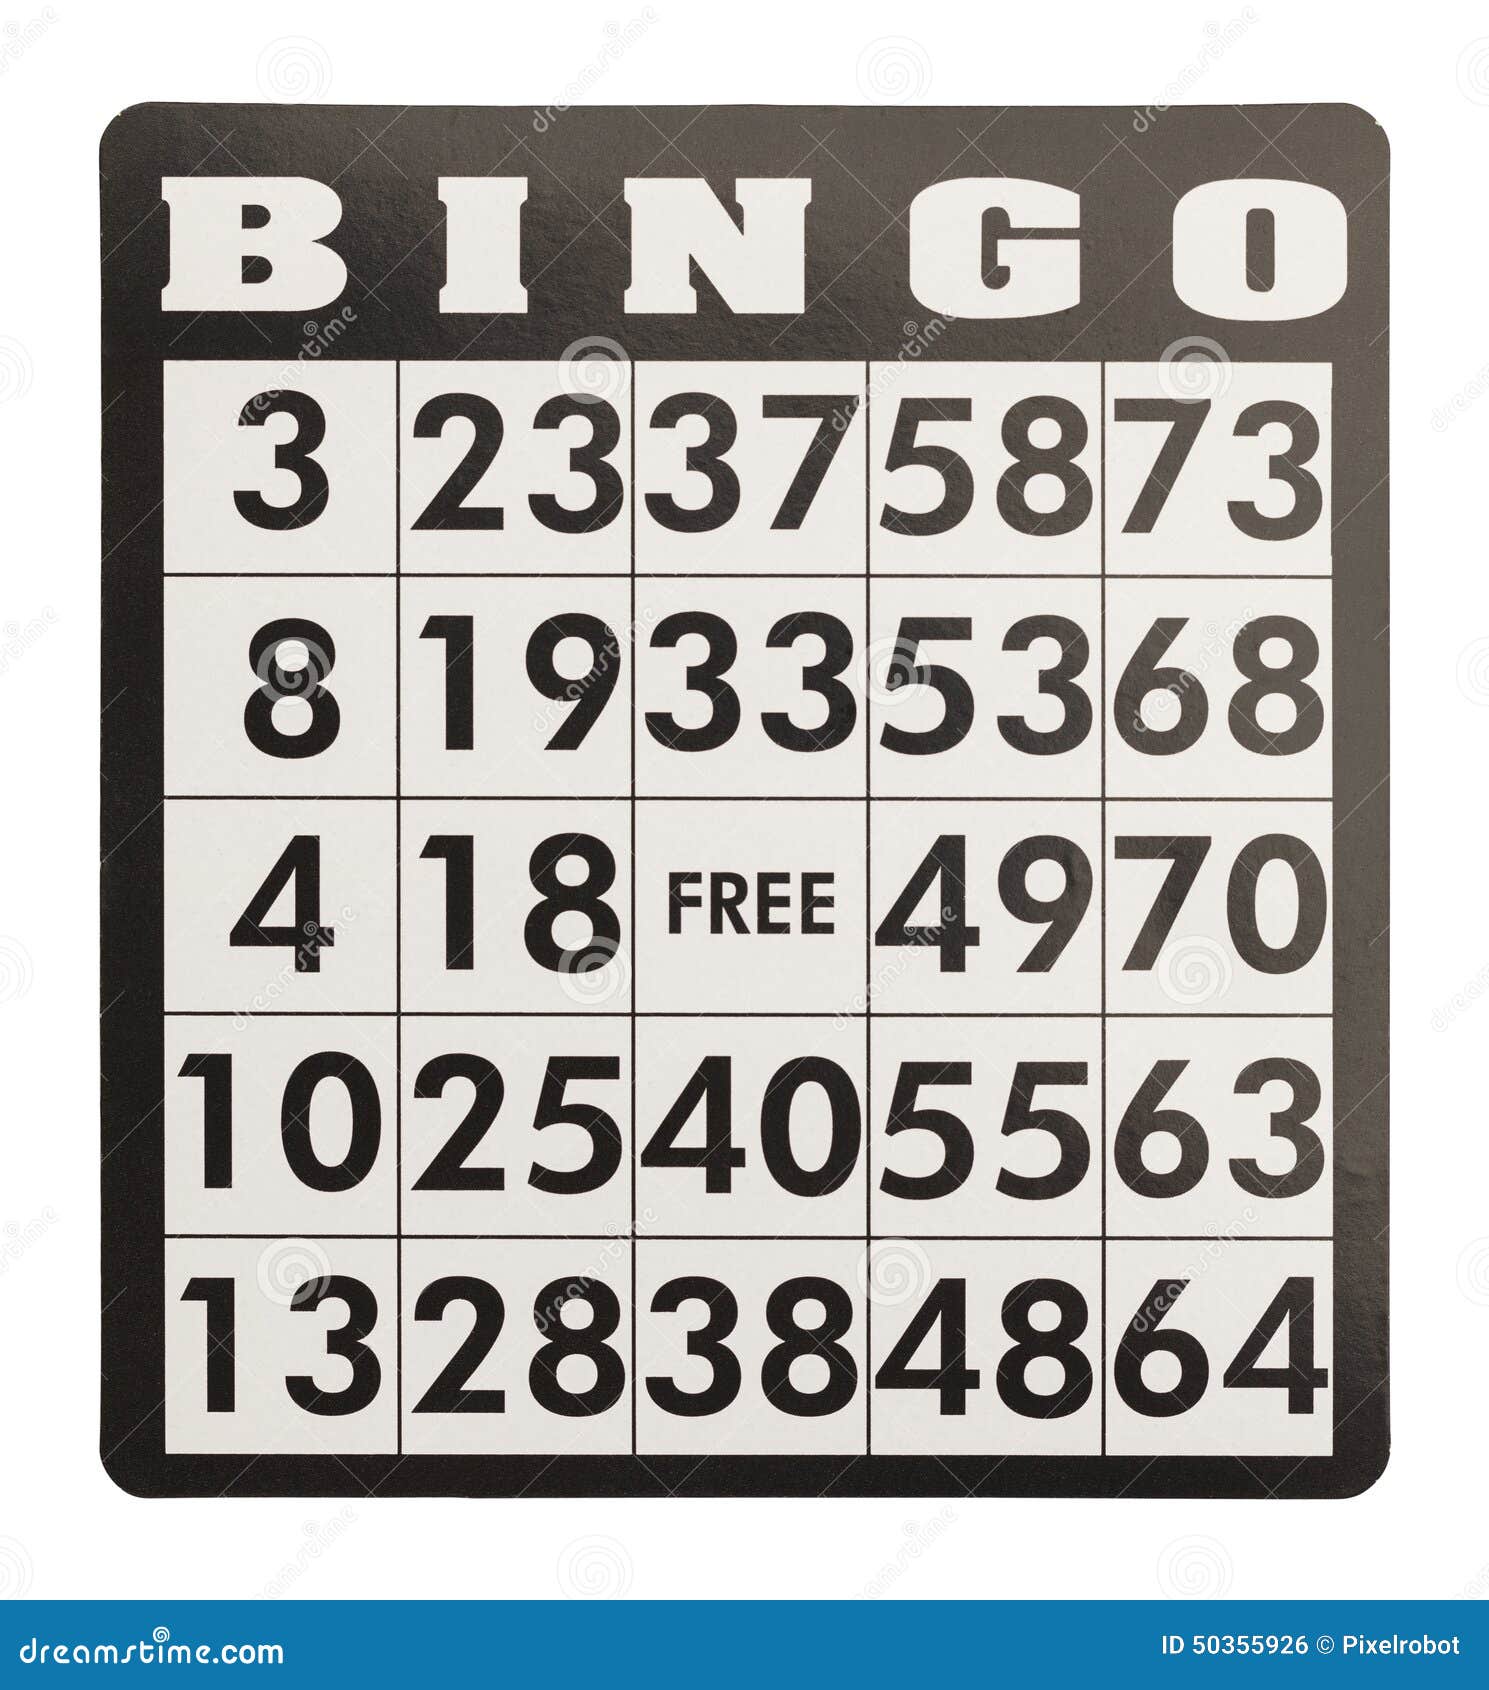 2 278 Bingo Card Photos Free Royalty Free Stock Photos From Dreamstime